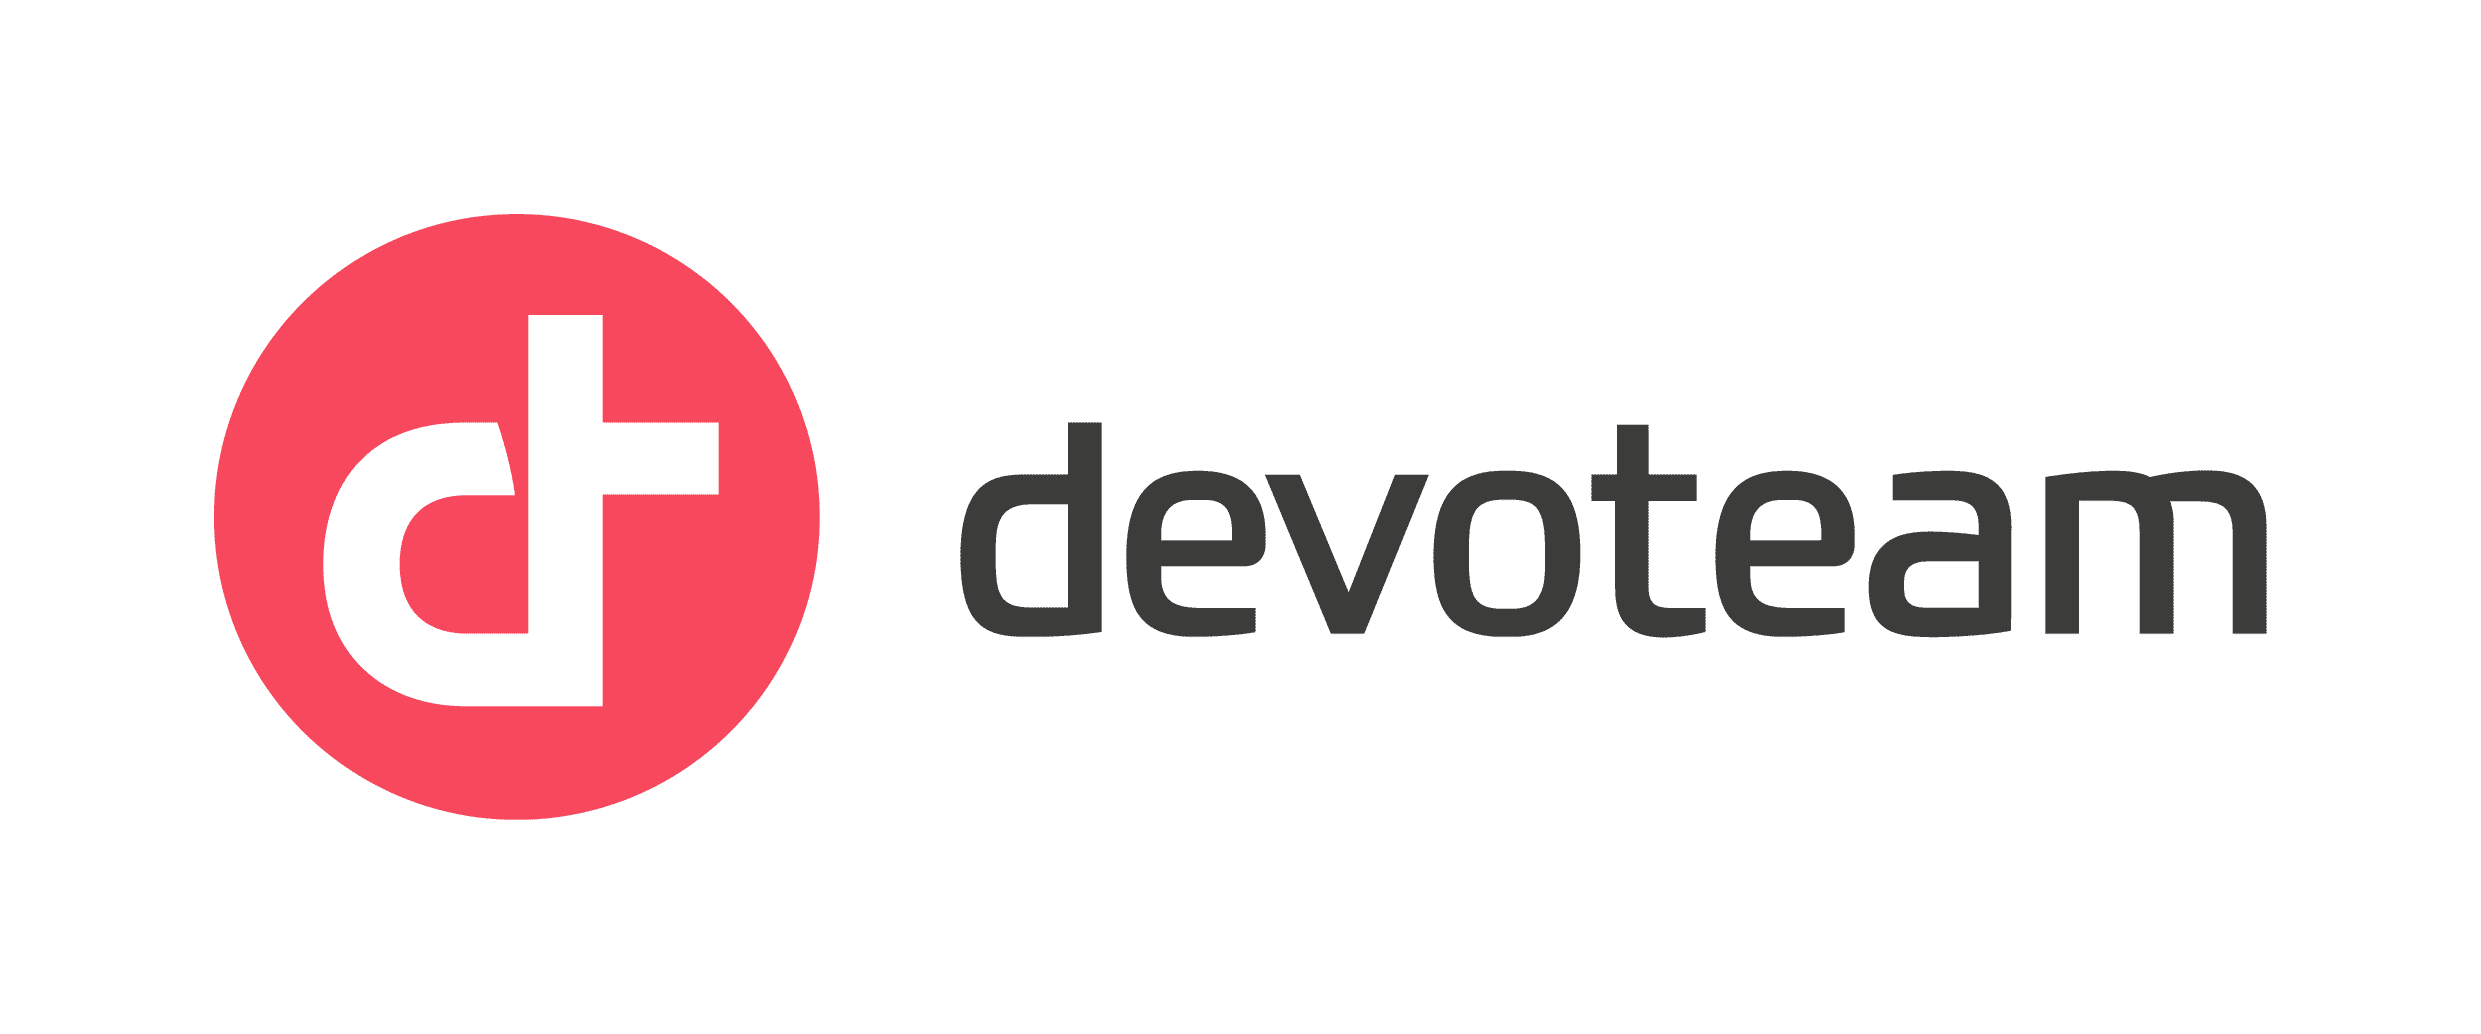 devoteam_logo